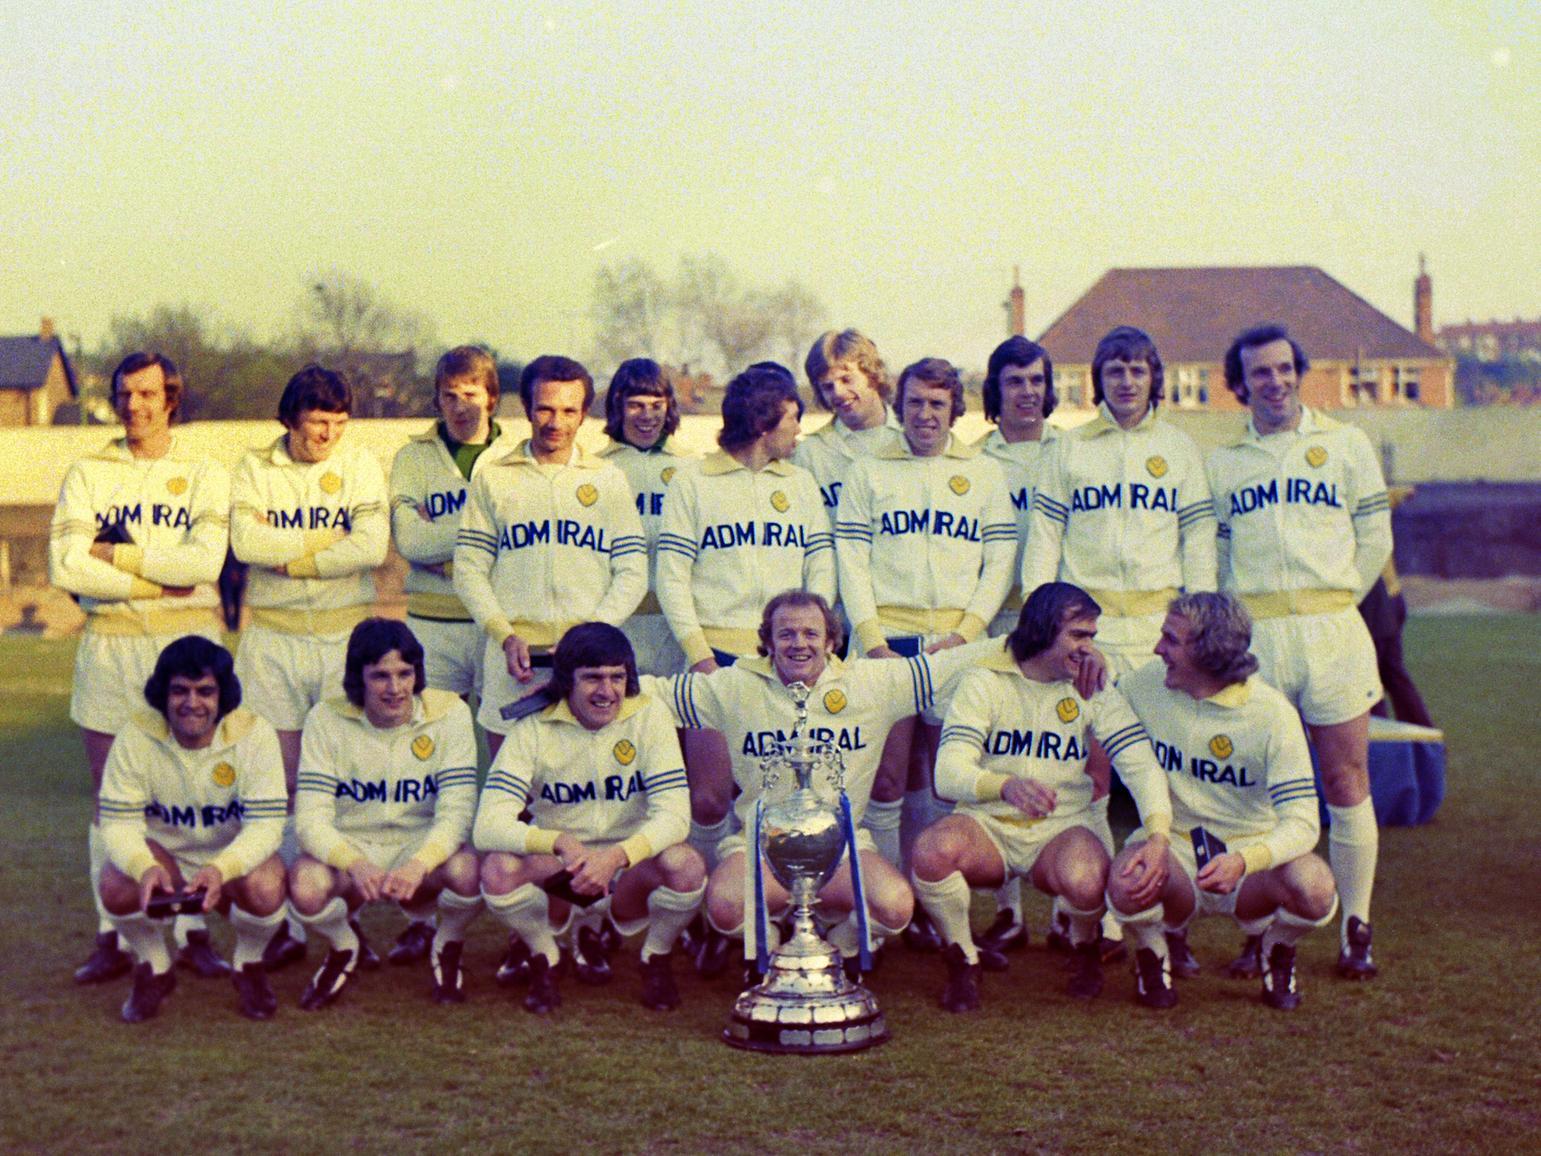 16 highlights from Leeds United's 1973/74 title winning season ...